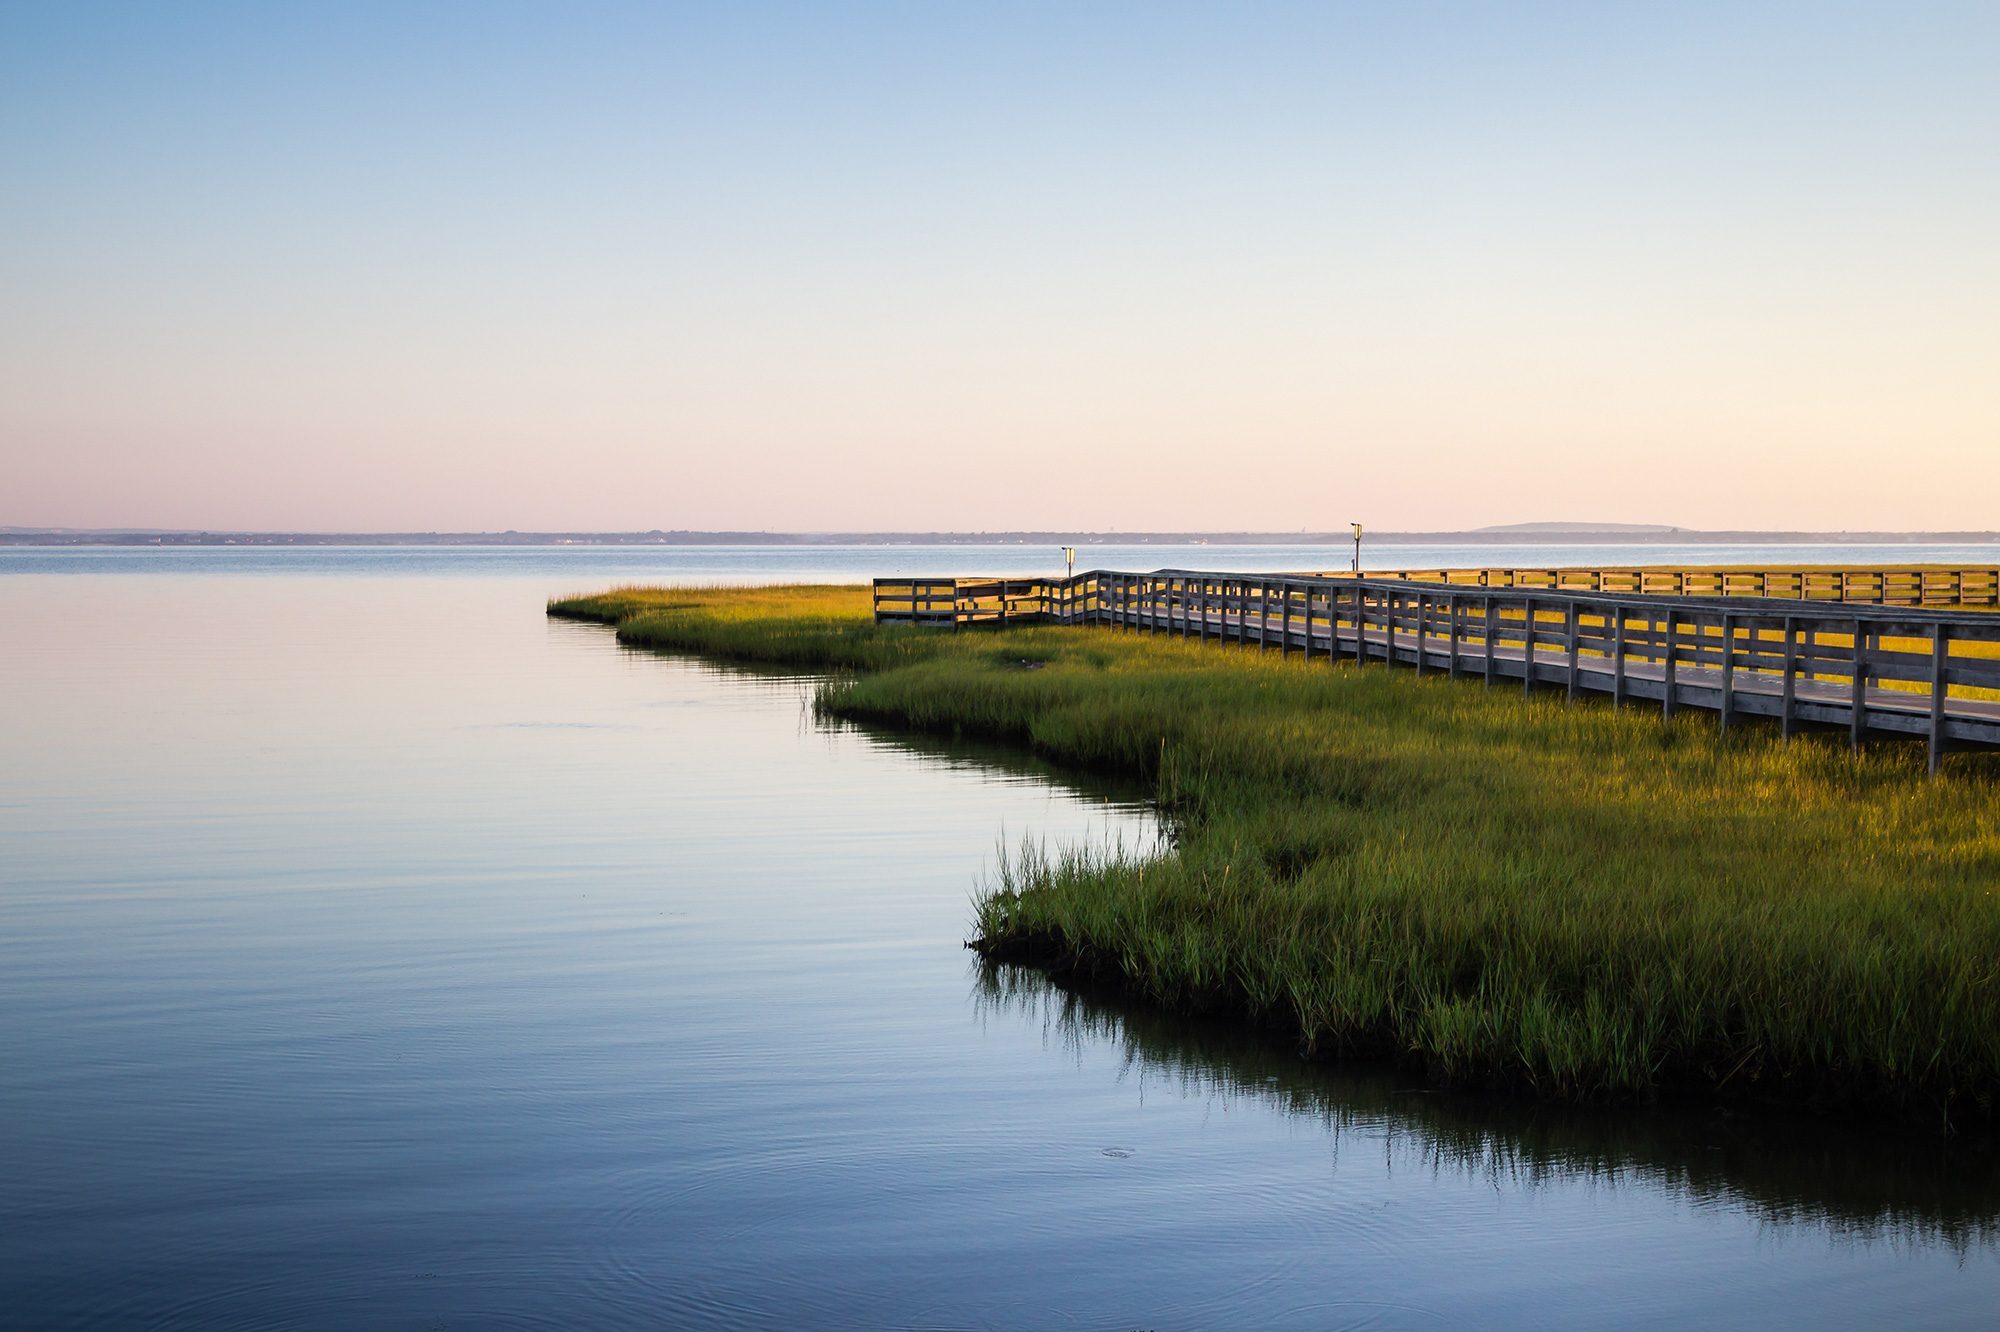 Championing coastal wetlands: Blue Carbon Lab is restoring lost ecosystems